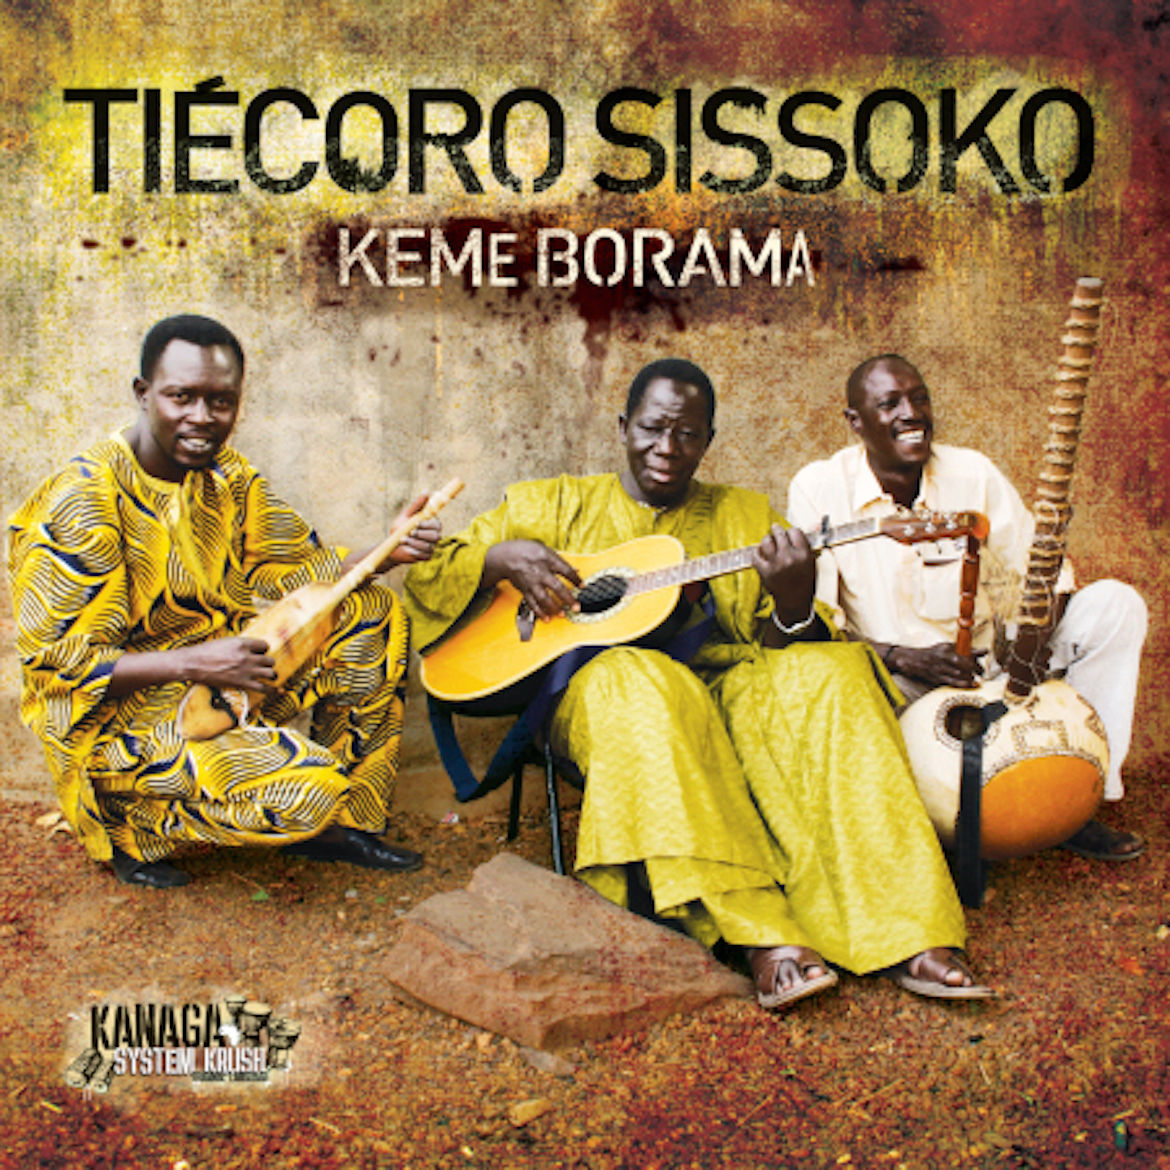 Keme Borama album cover from Tiecoro Sissoko